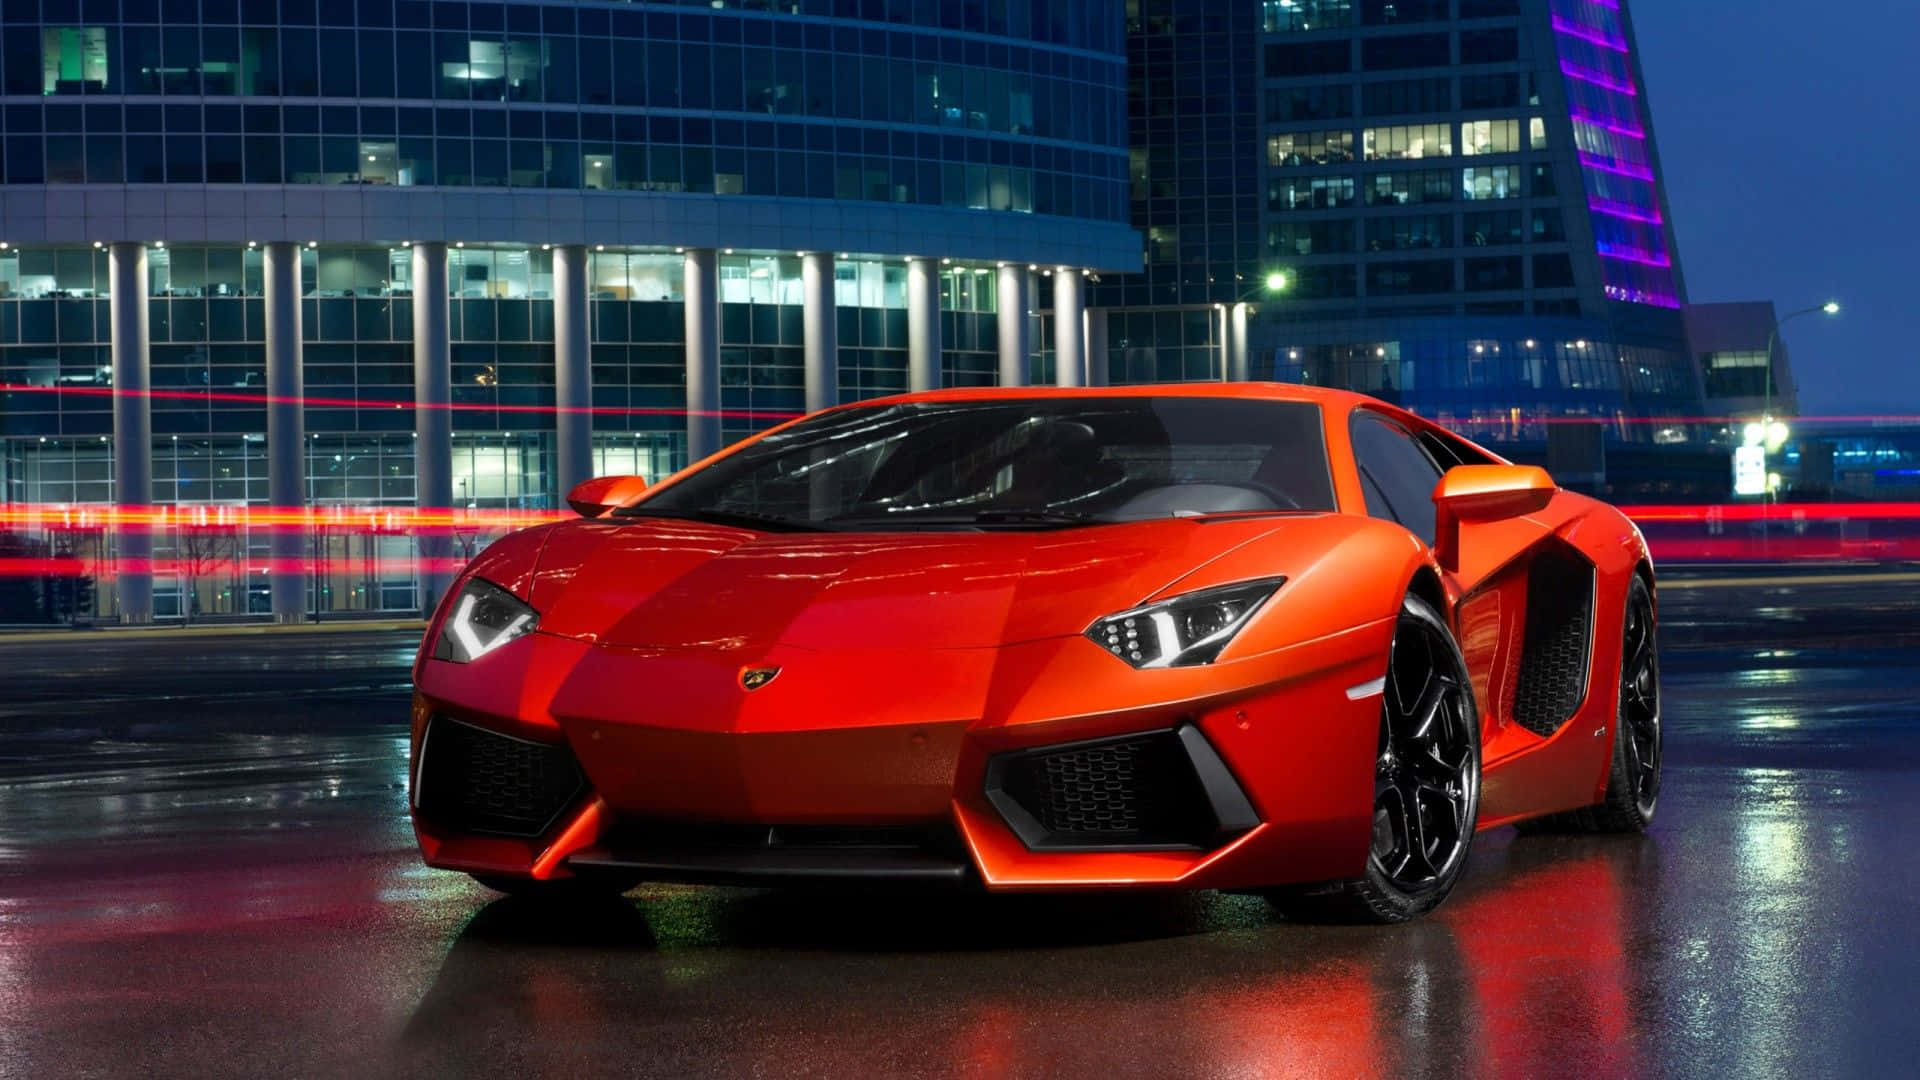 Cool Red Lamborghini Car Picture